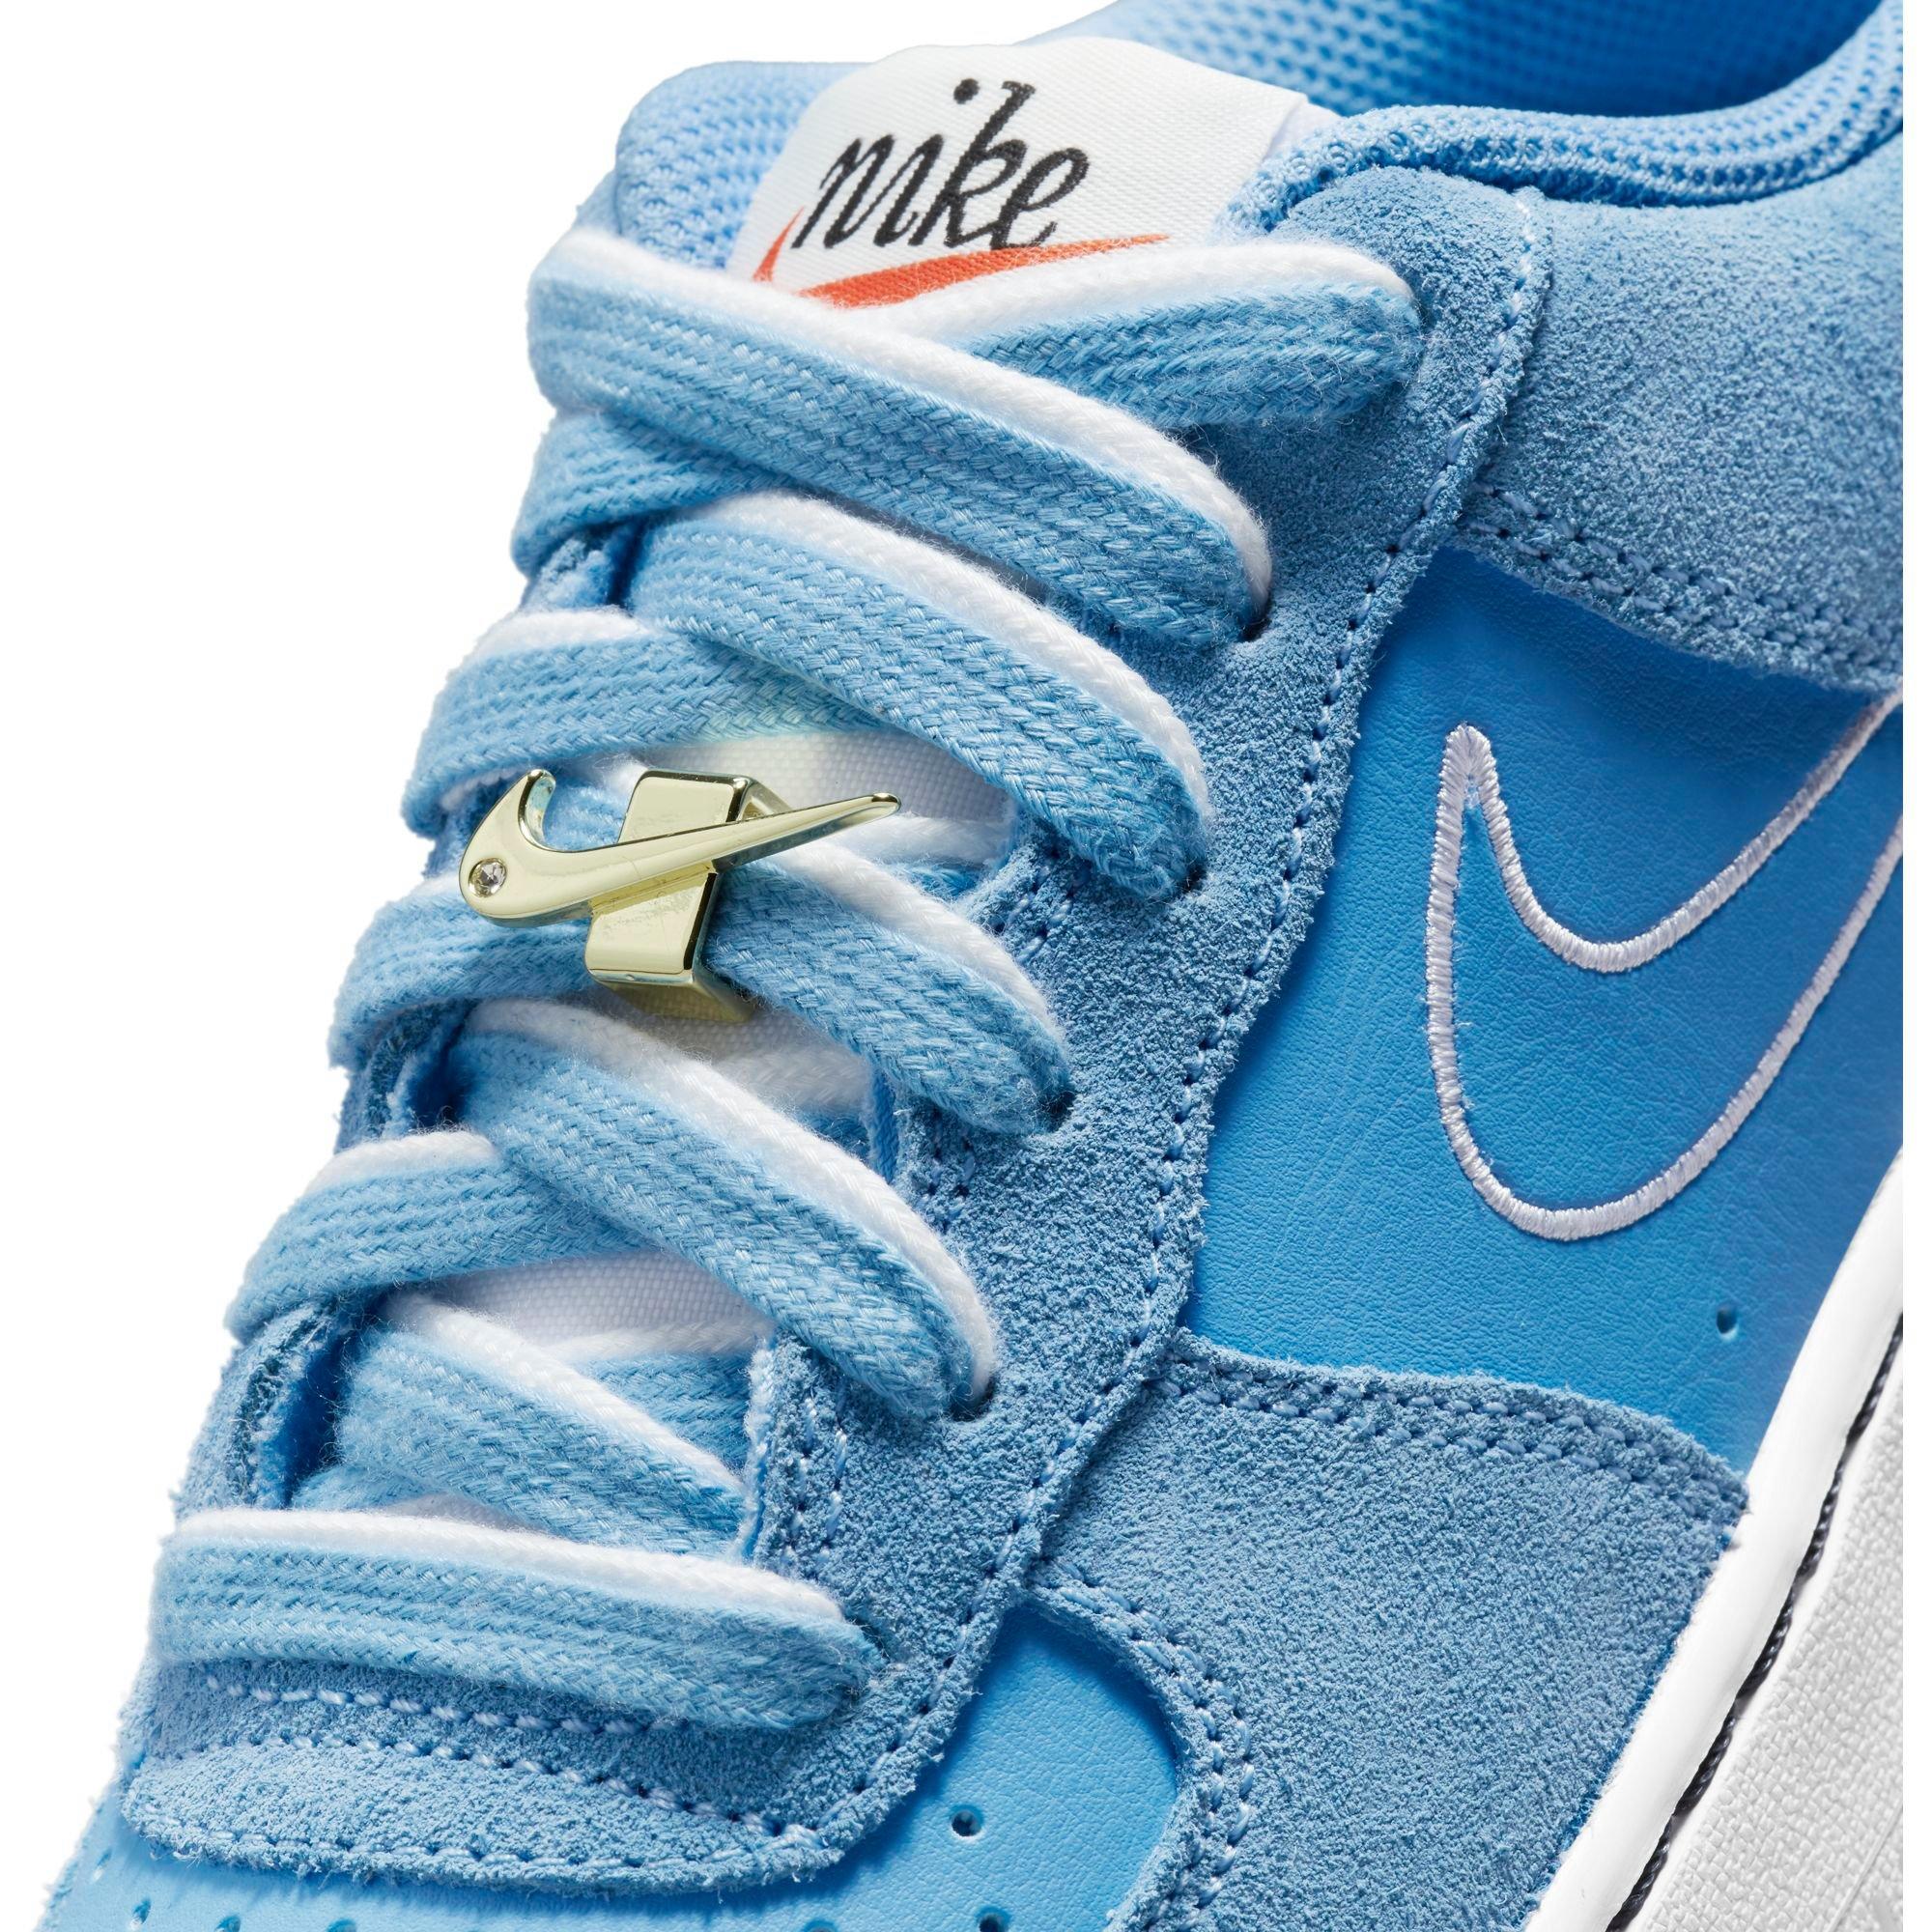 Nike Air Force 1 X Sky Blue Baby Blue Colour Block Design 